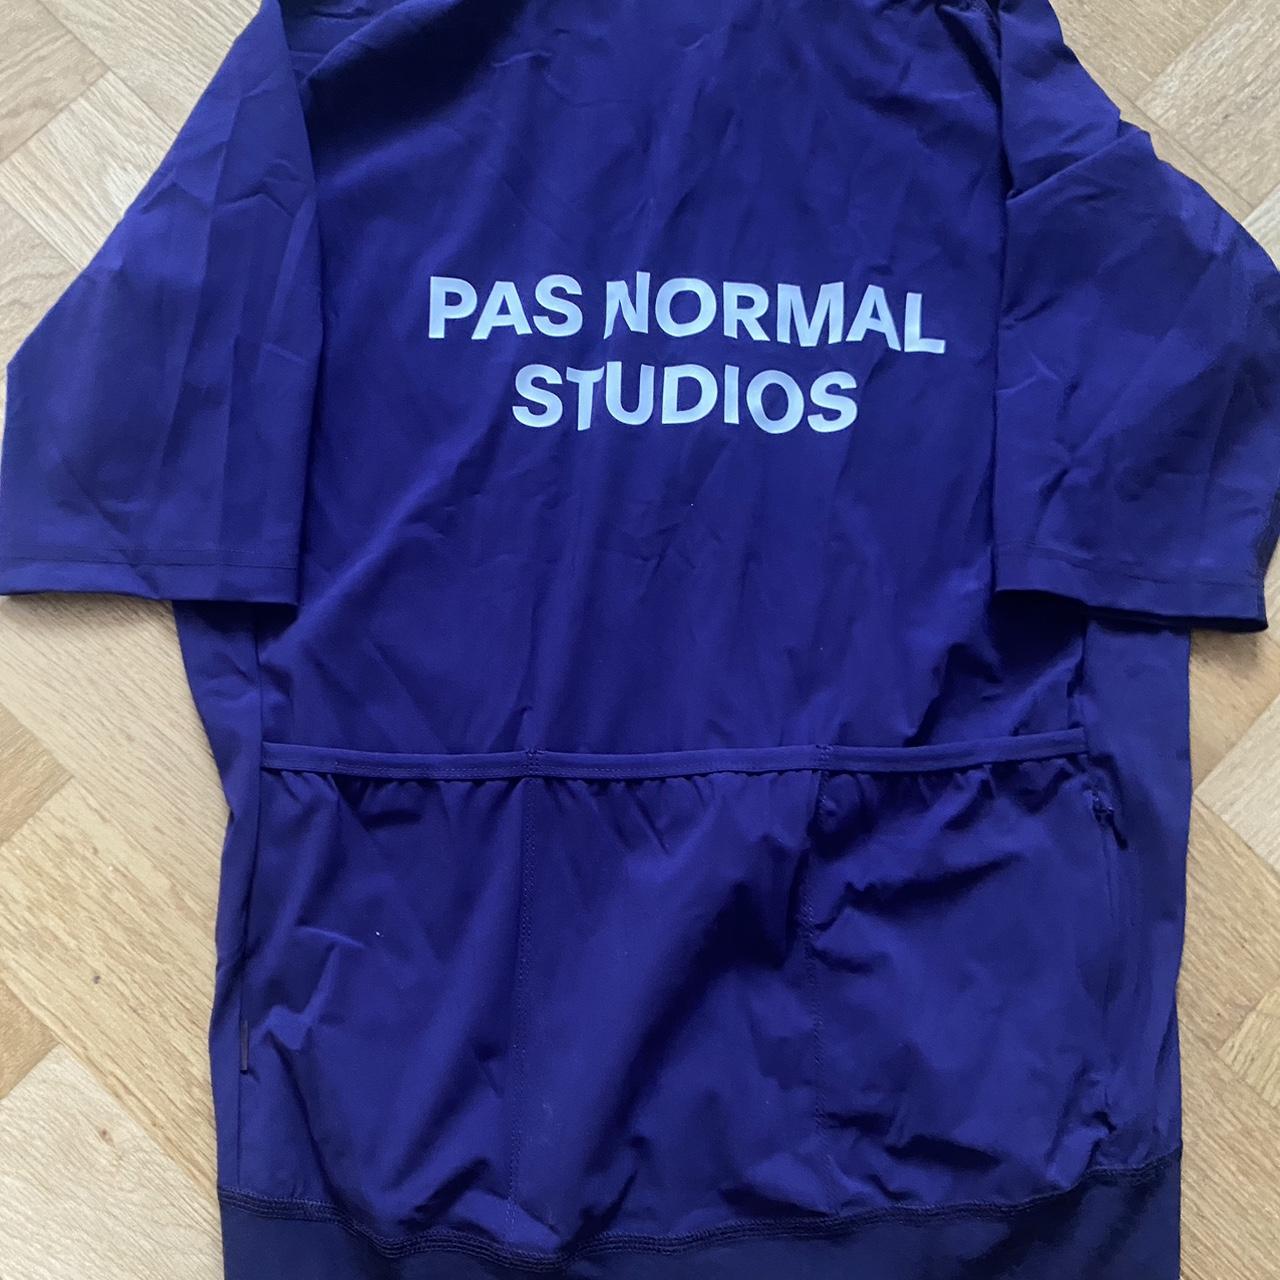 Pas normal studios jersey Used twice Purple - Depop